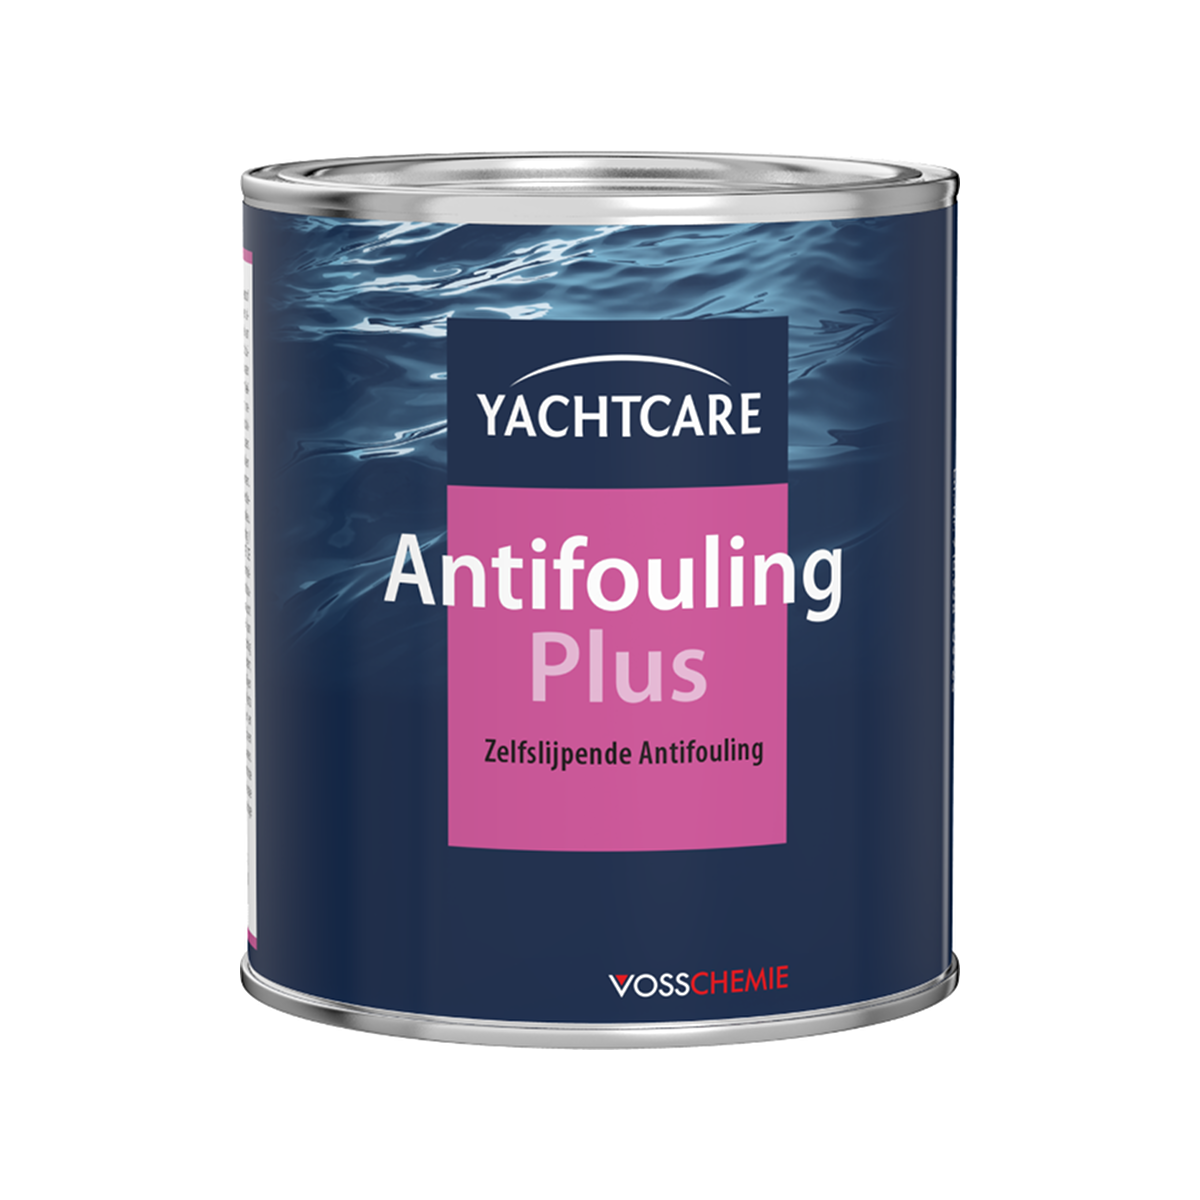 Yachtcare Plus Antifouling toegelaten in Nederland - zwart, 750ml